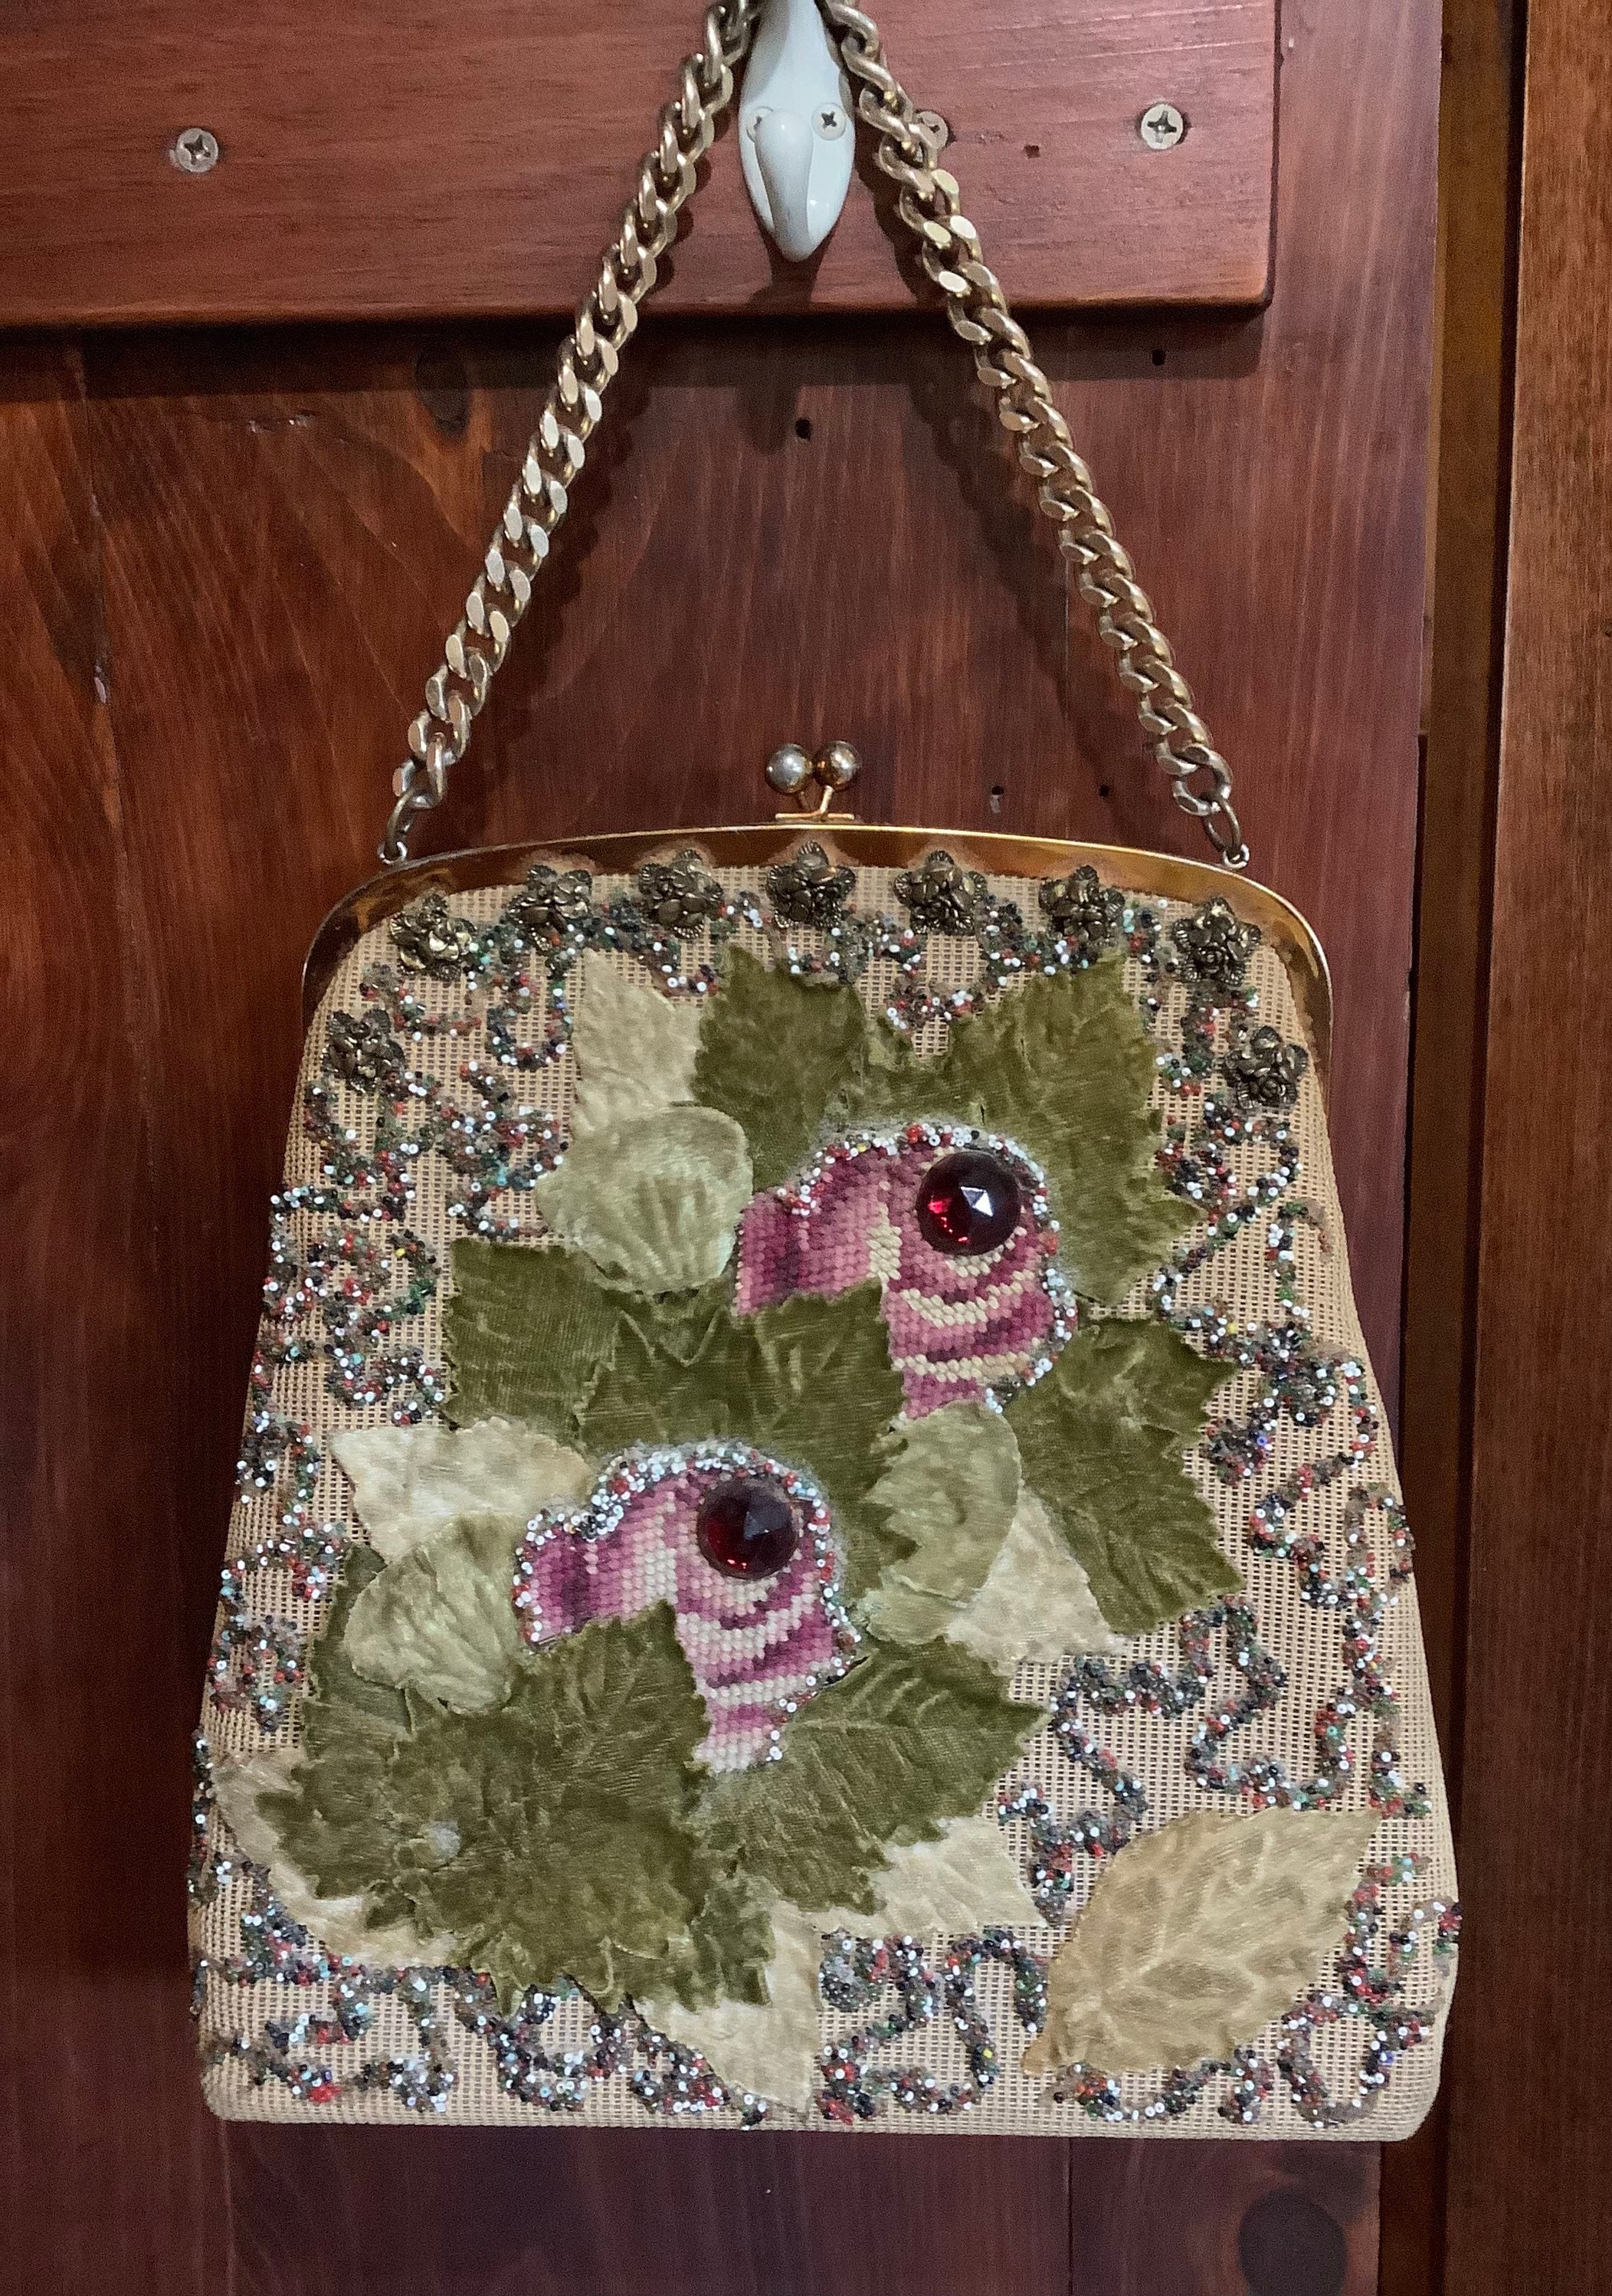 Tallinn, Estonia-August 2019, Vintage Wicker Handbags in Antique Shop.  Accessories Stock Photo - Image of details, handbag: 158092474